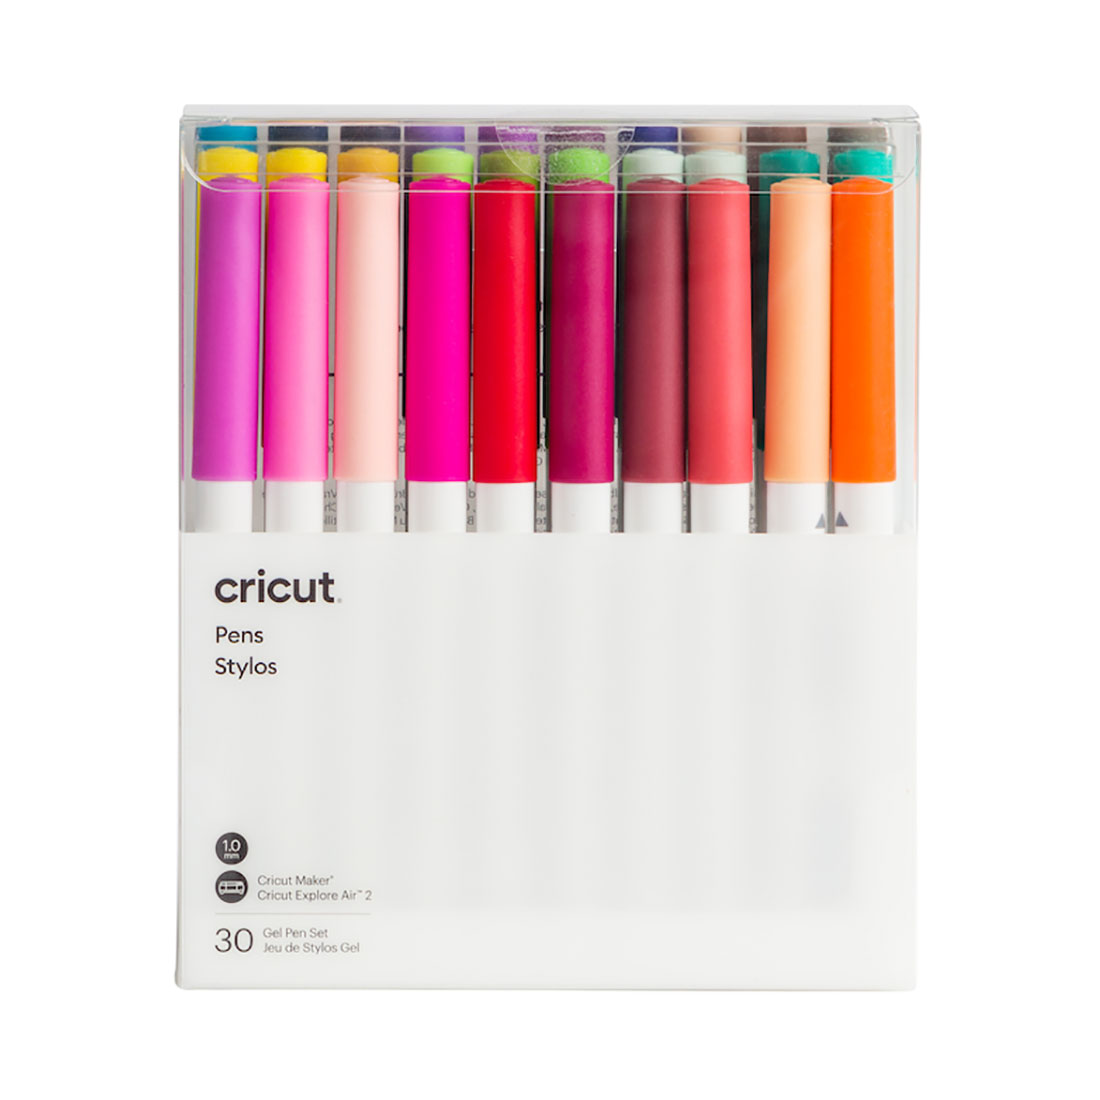 How to Use Cricut Pens to Make Custom Printable Artwork - Twelve